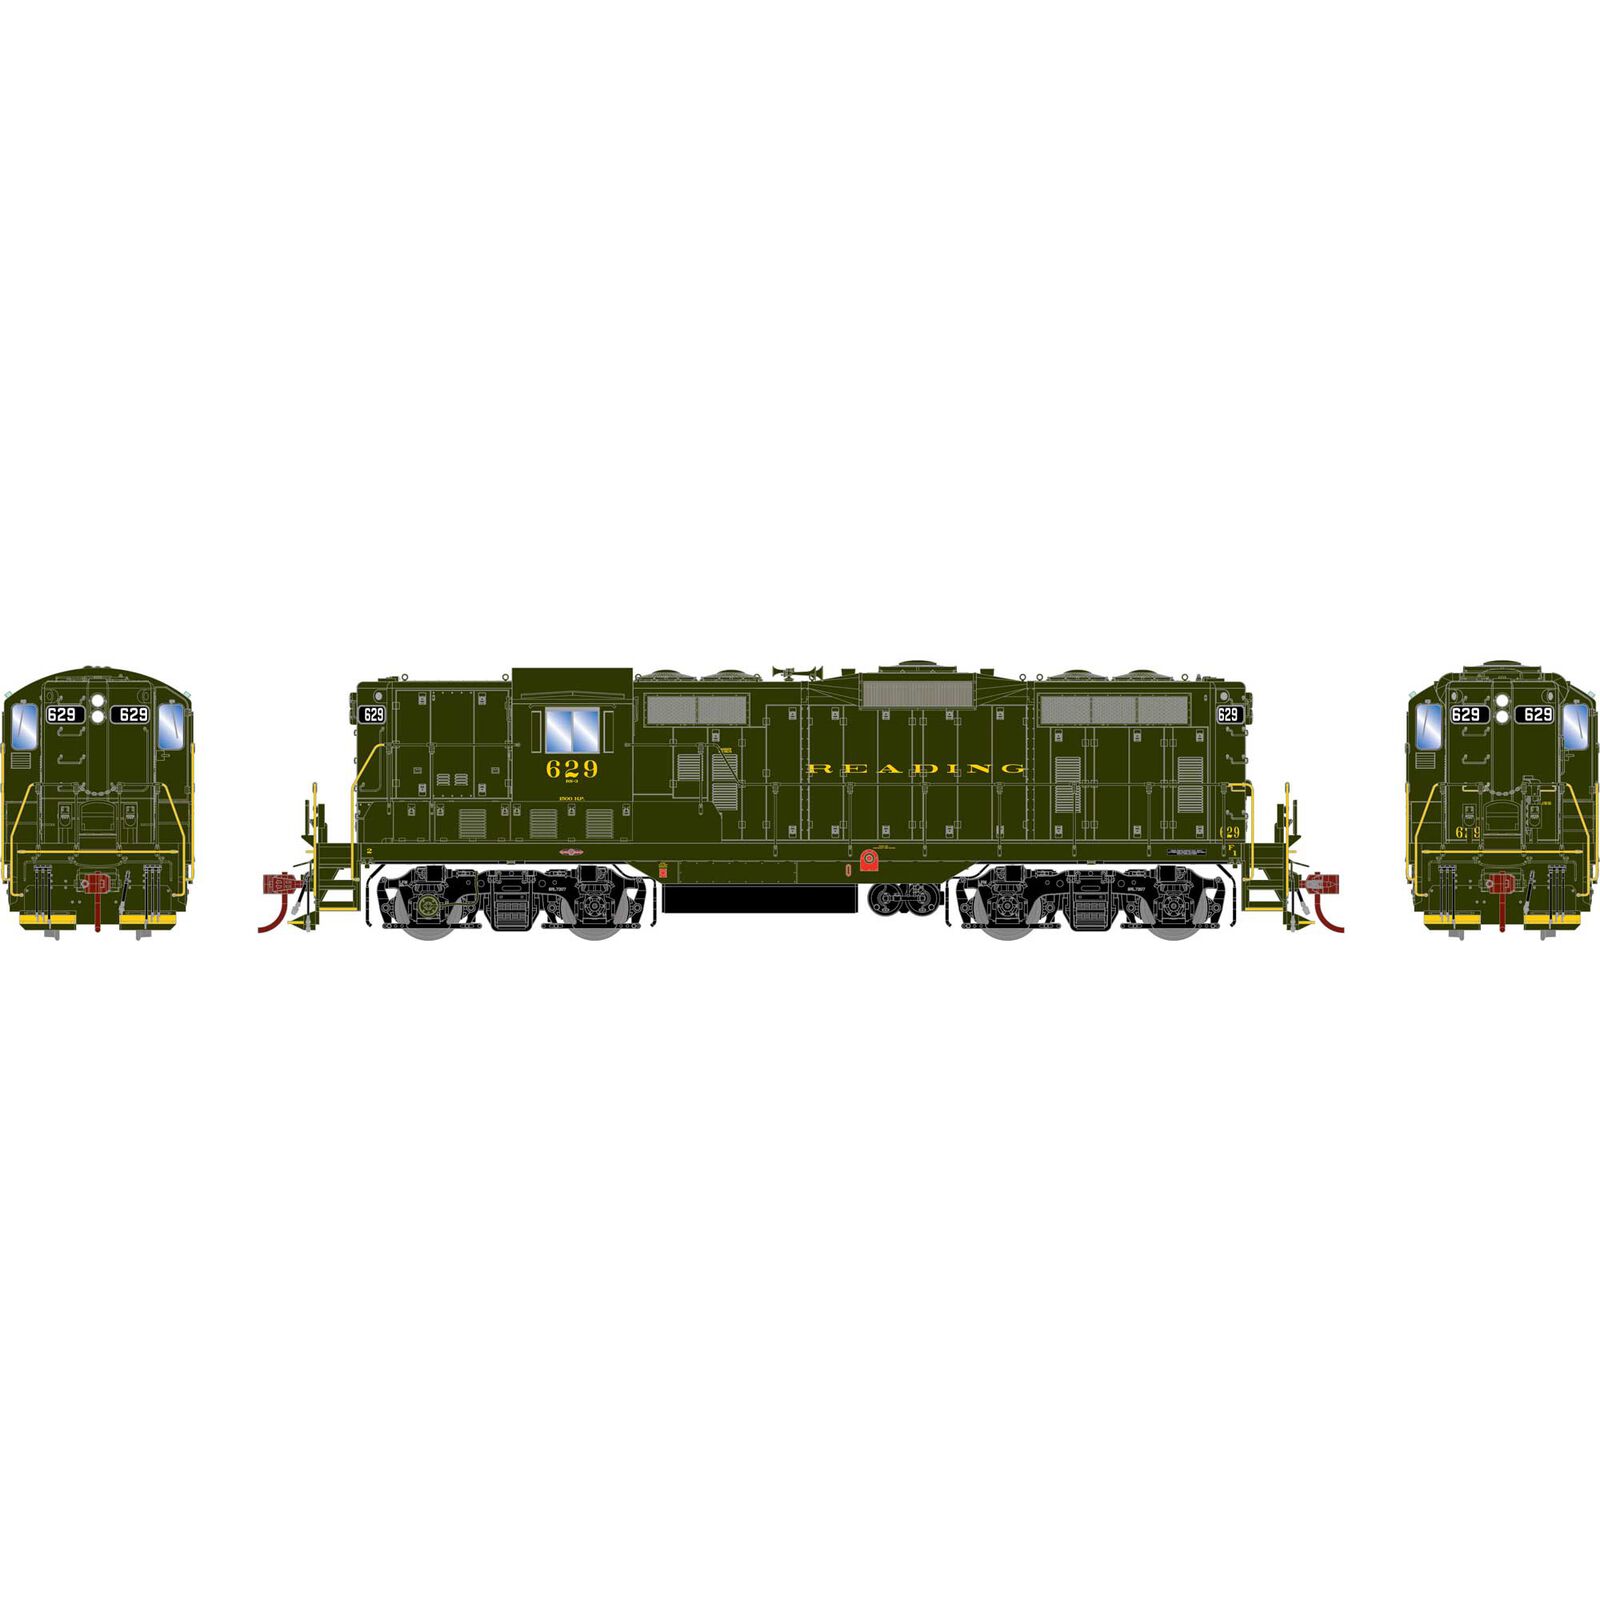 HO GP7 Locomotive, RDG #629